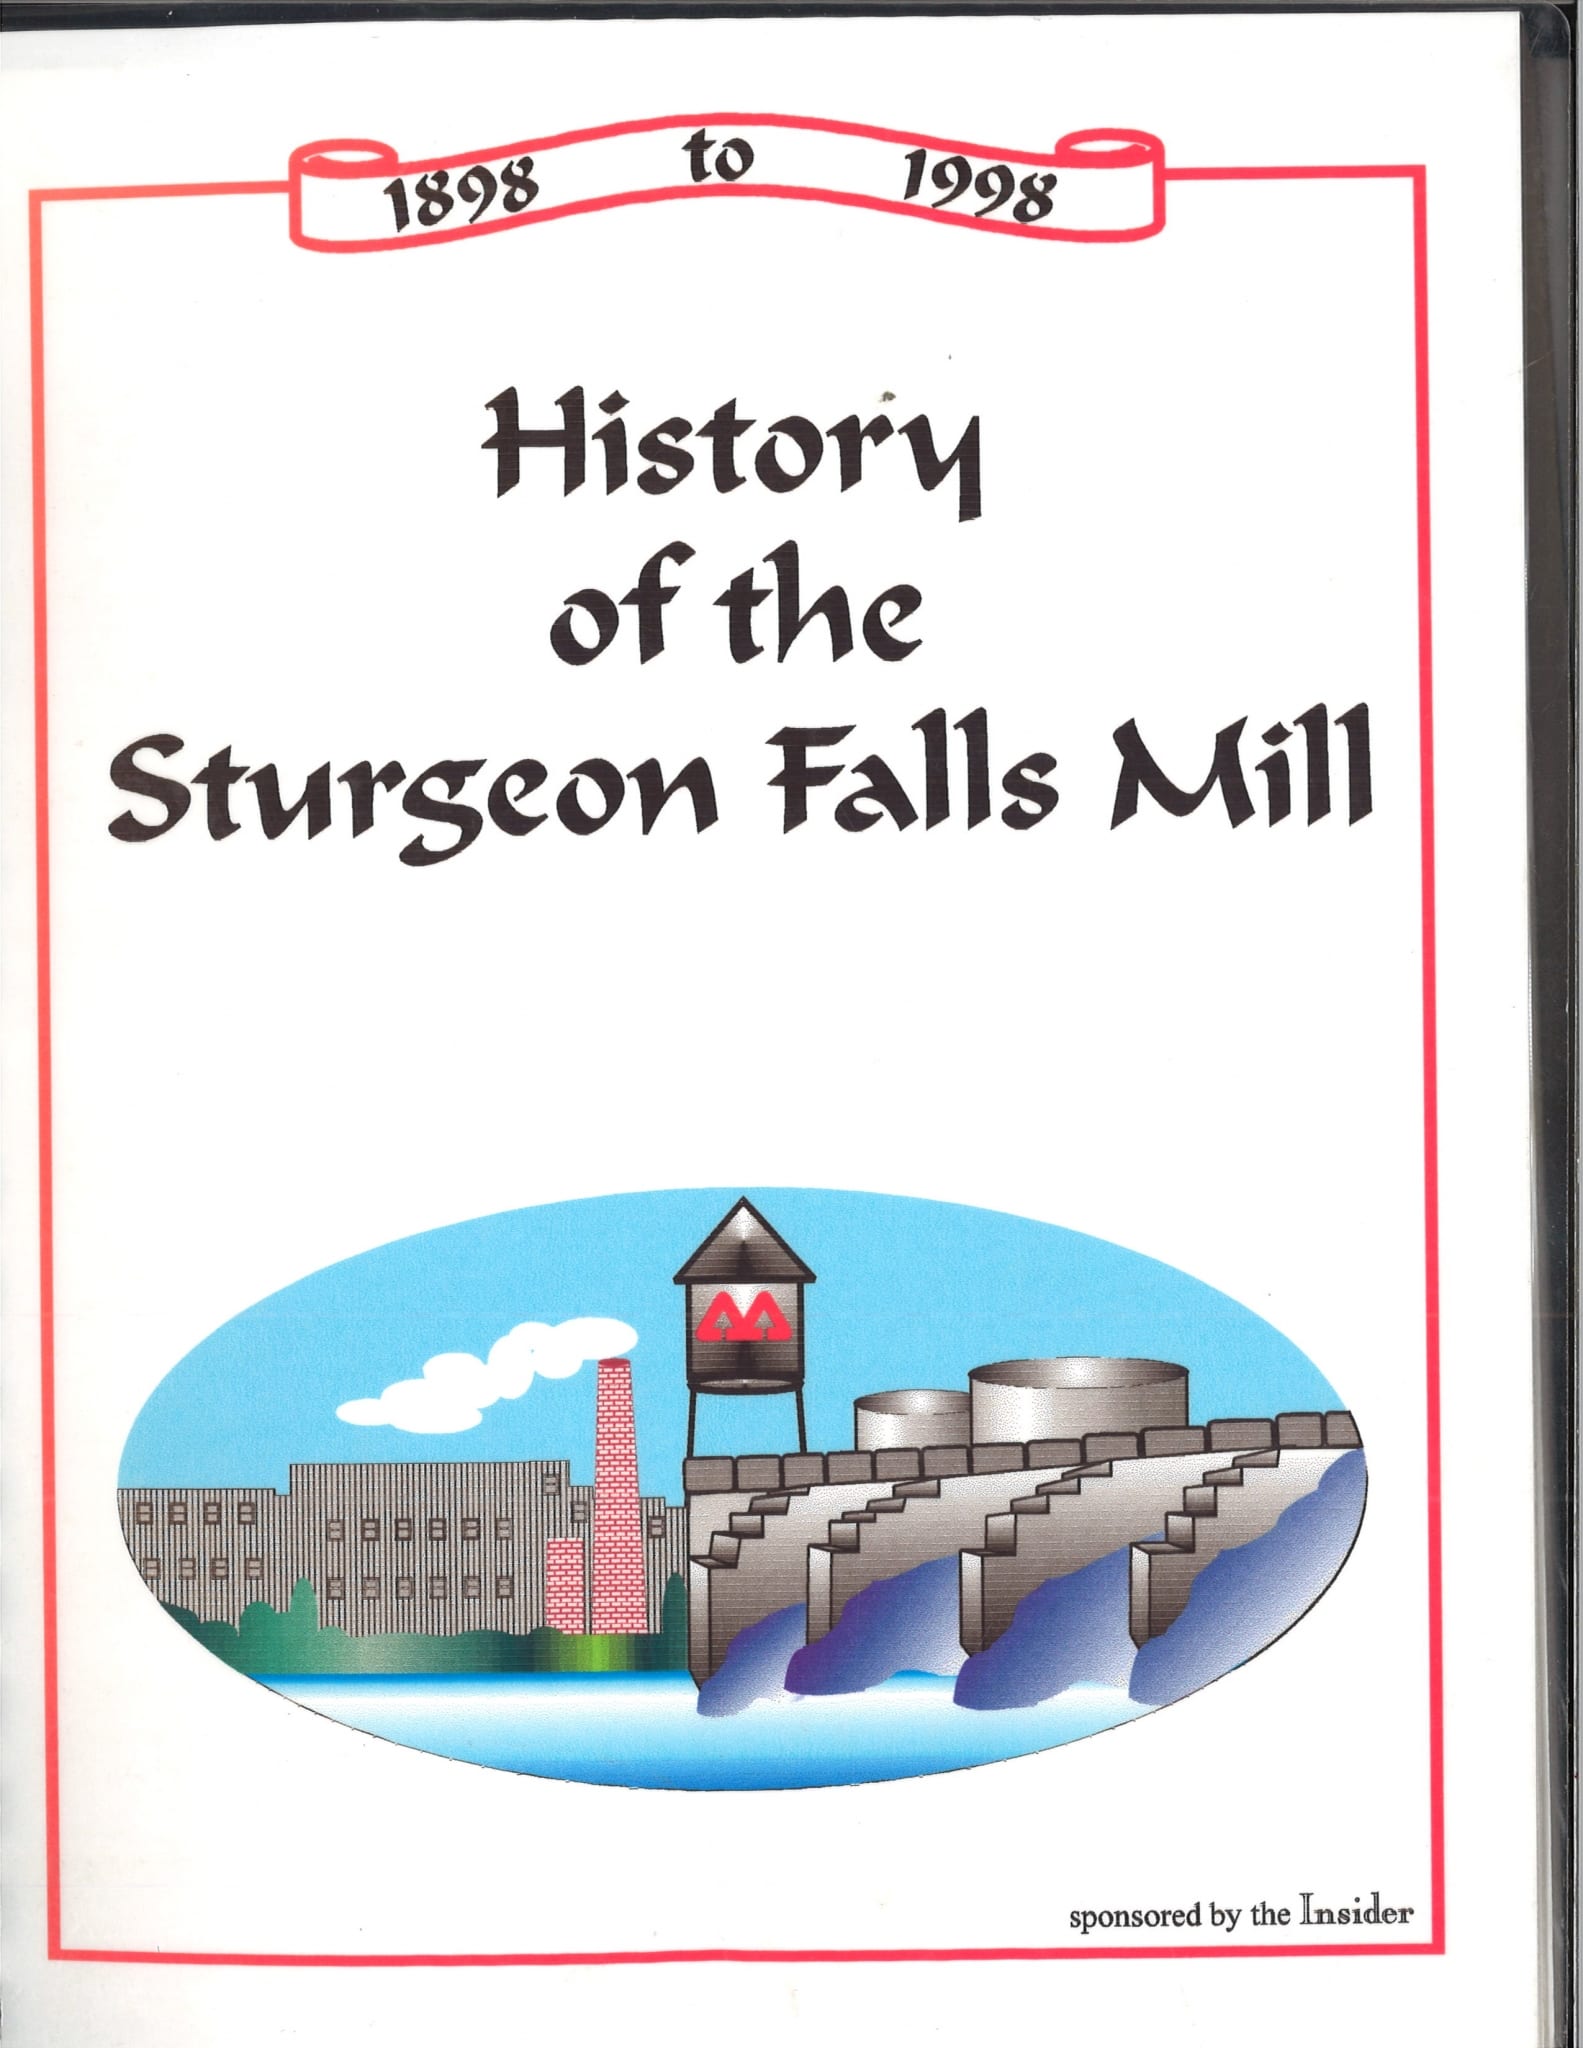 Sturgeon Mill